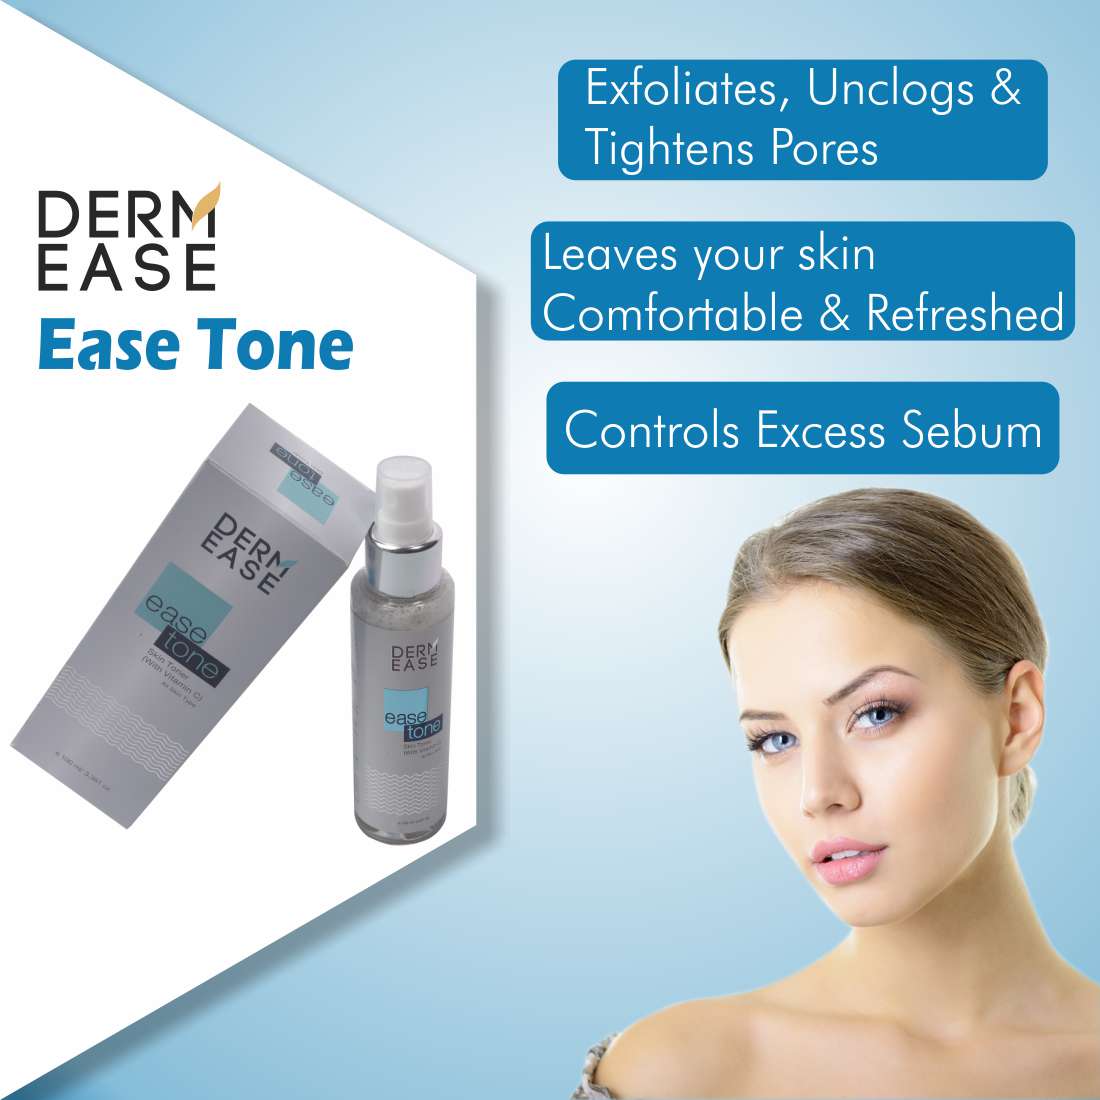 DERM EASE Ease Tone Skin Toner